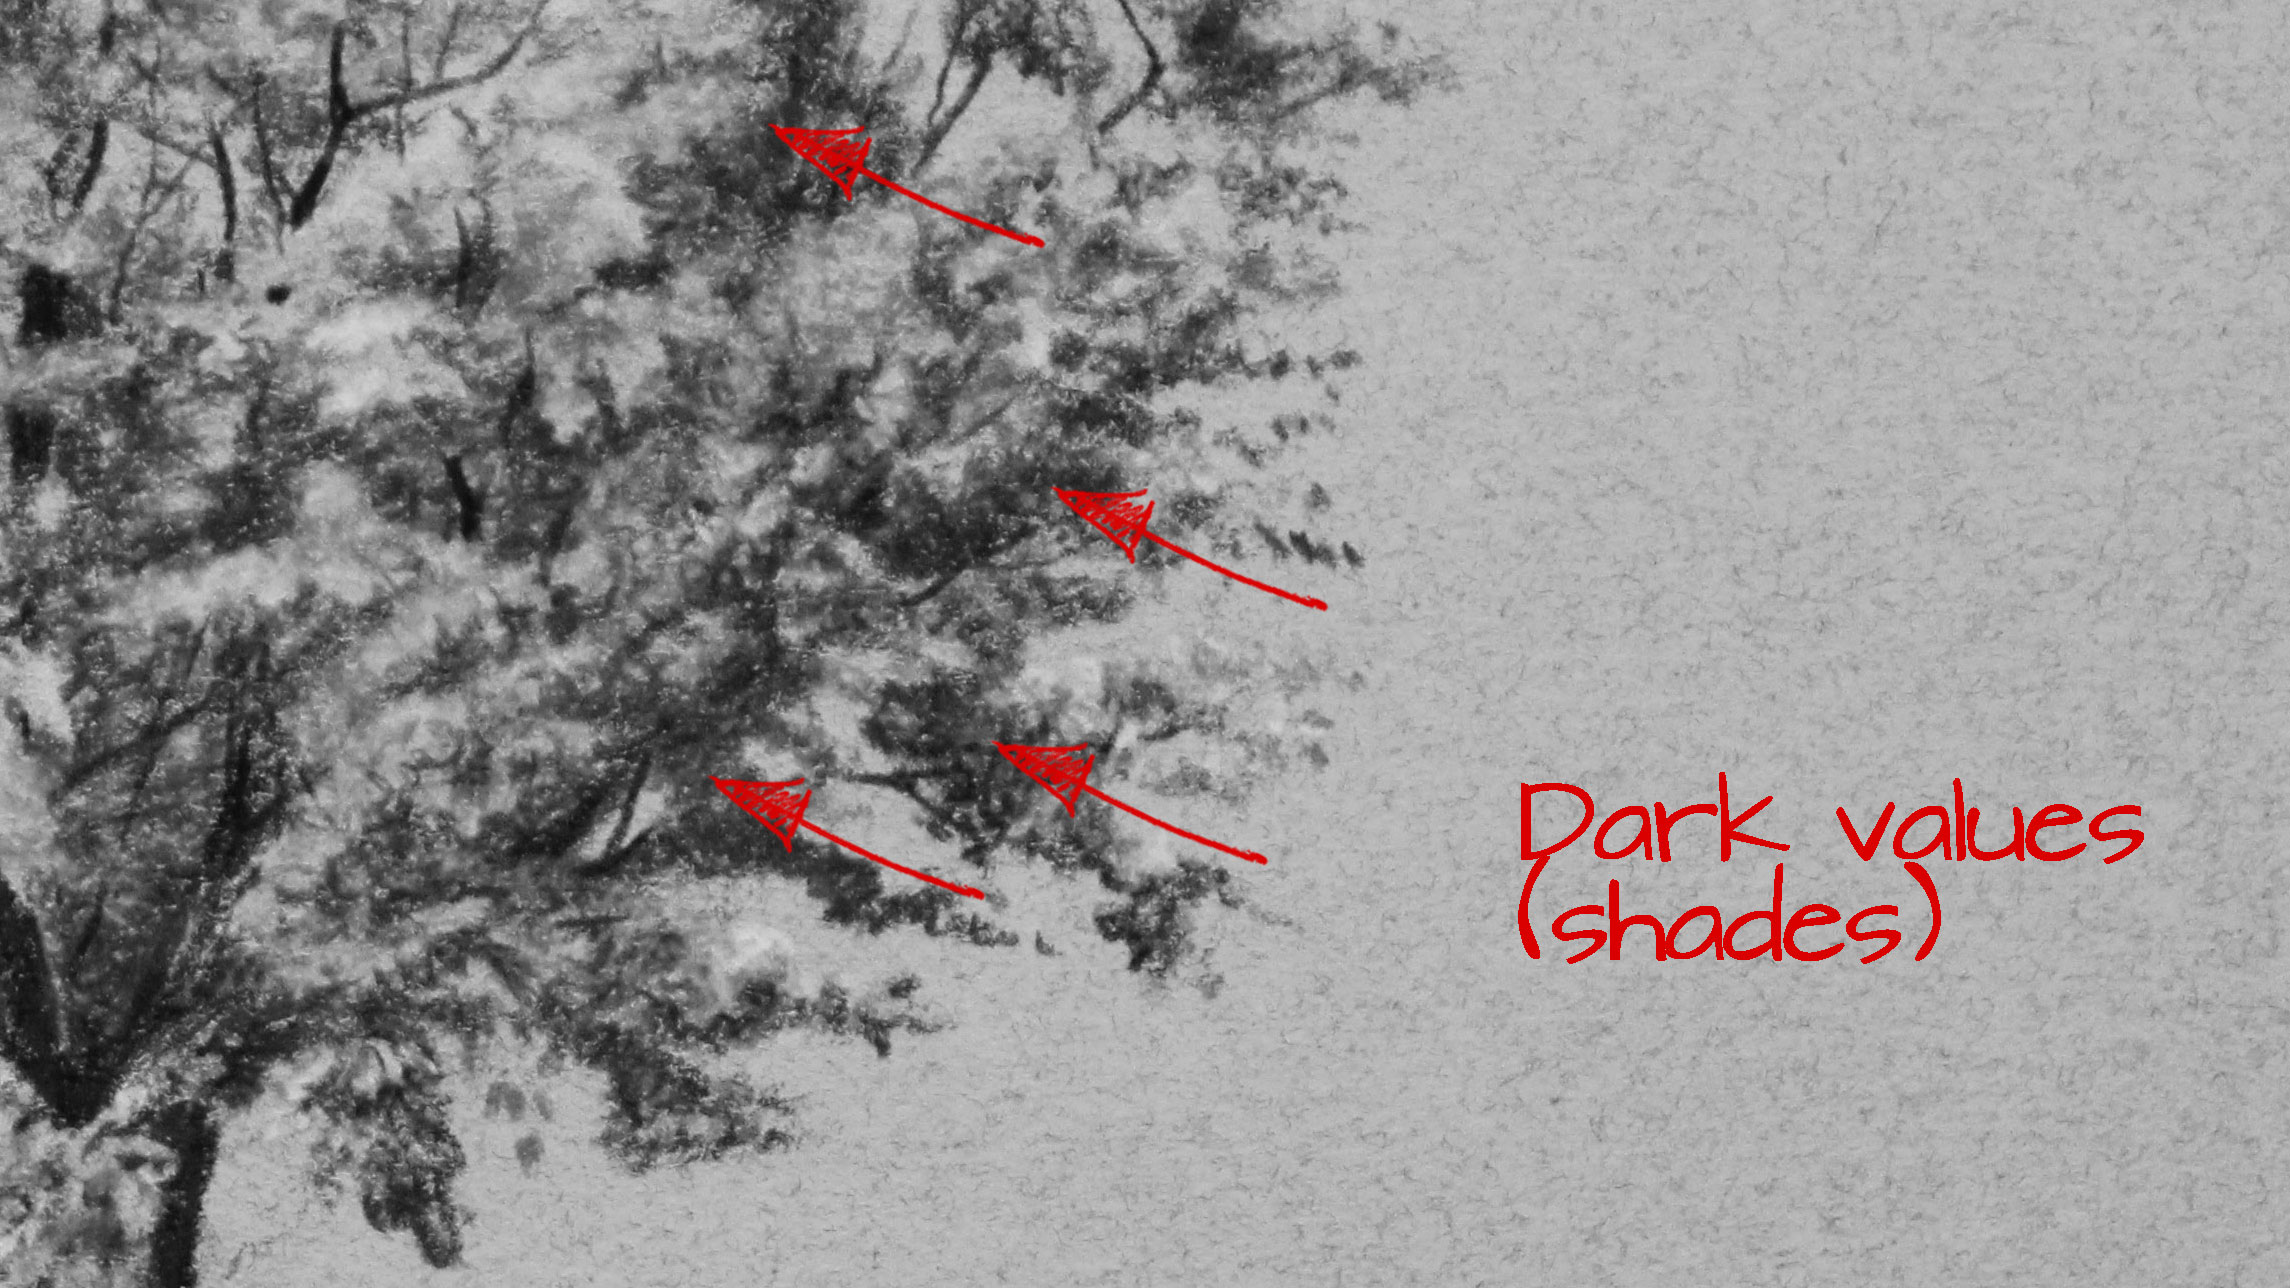 Dark values trees